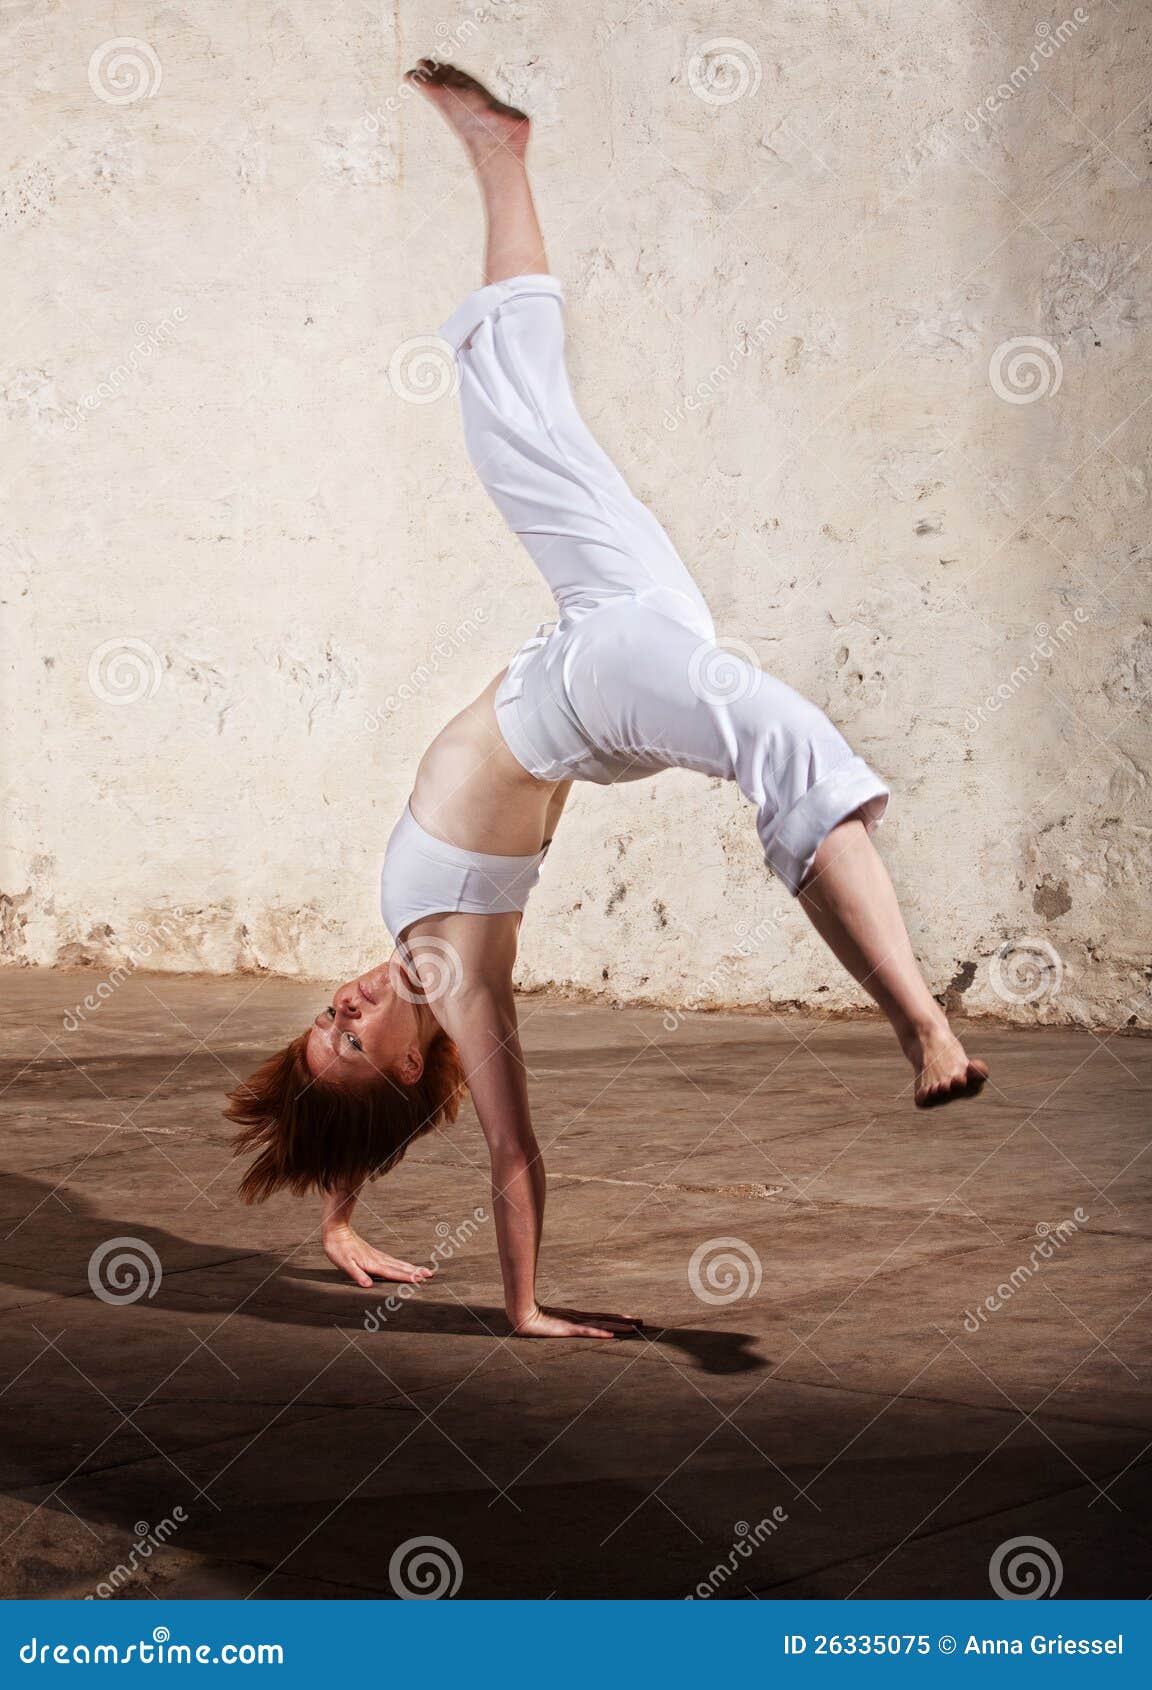 capoeria cartwheel demonstration